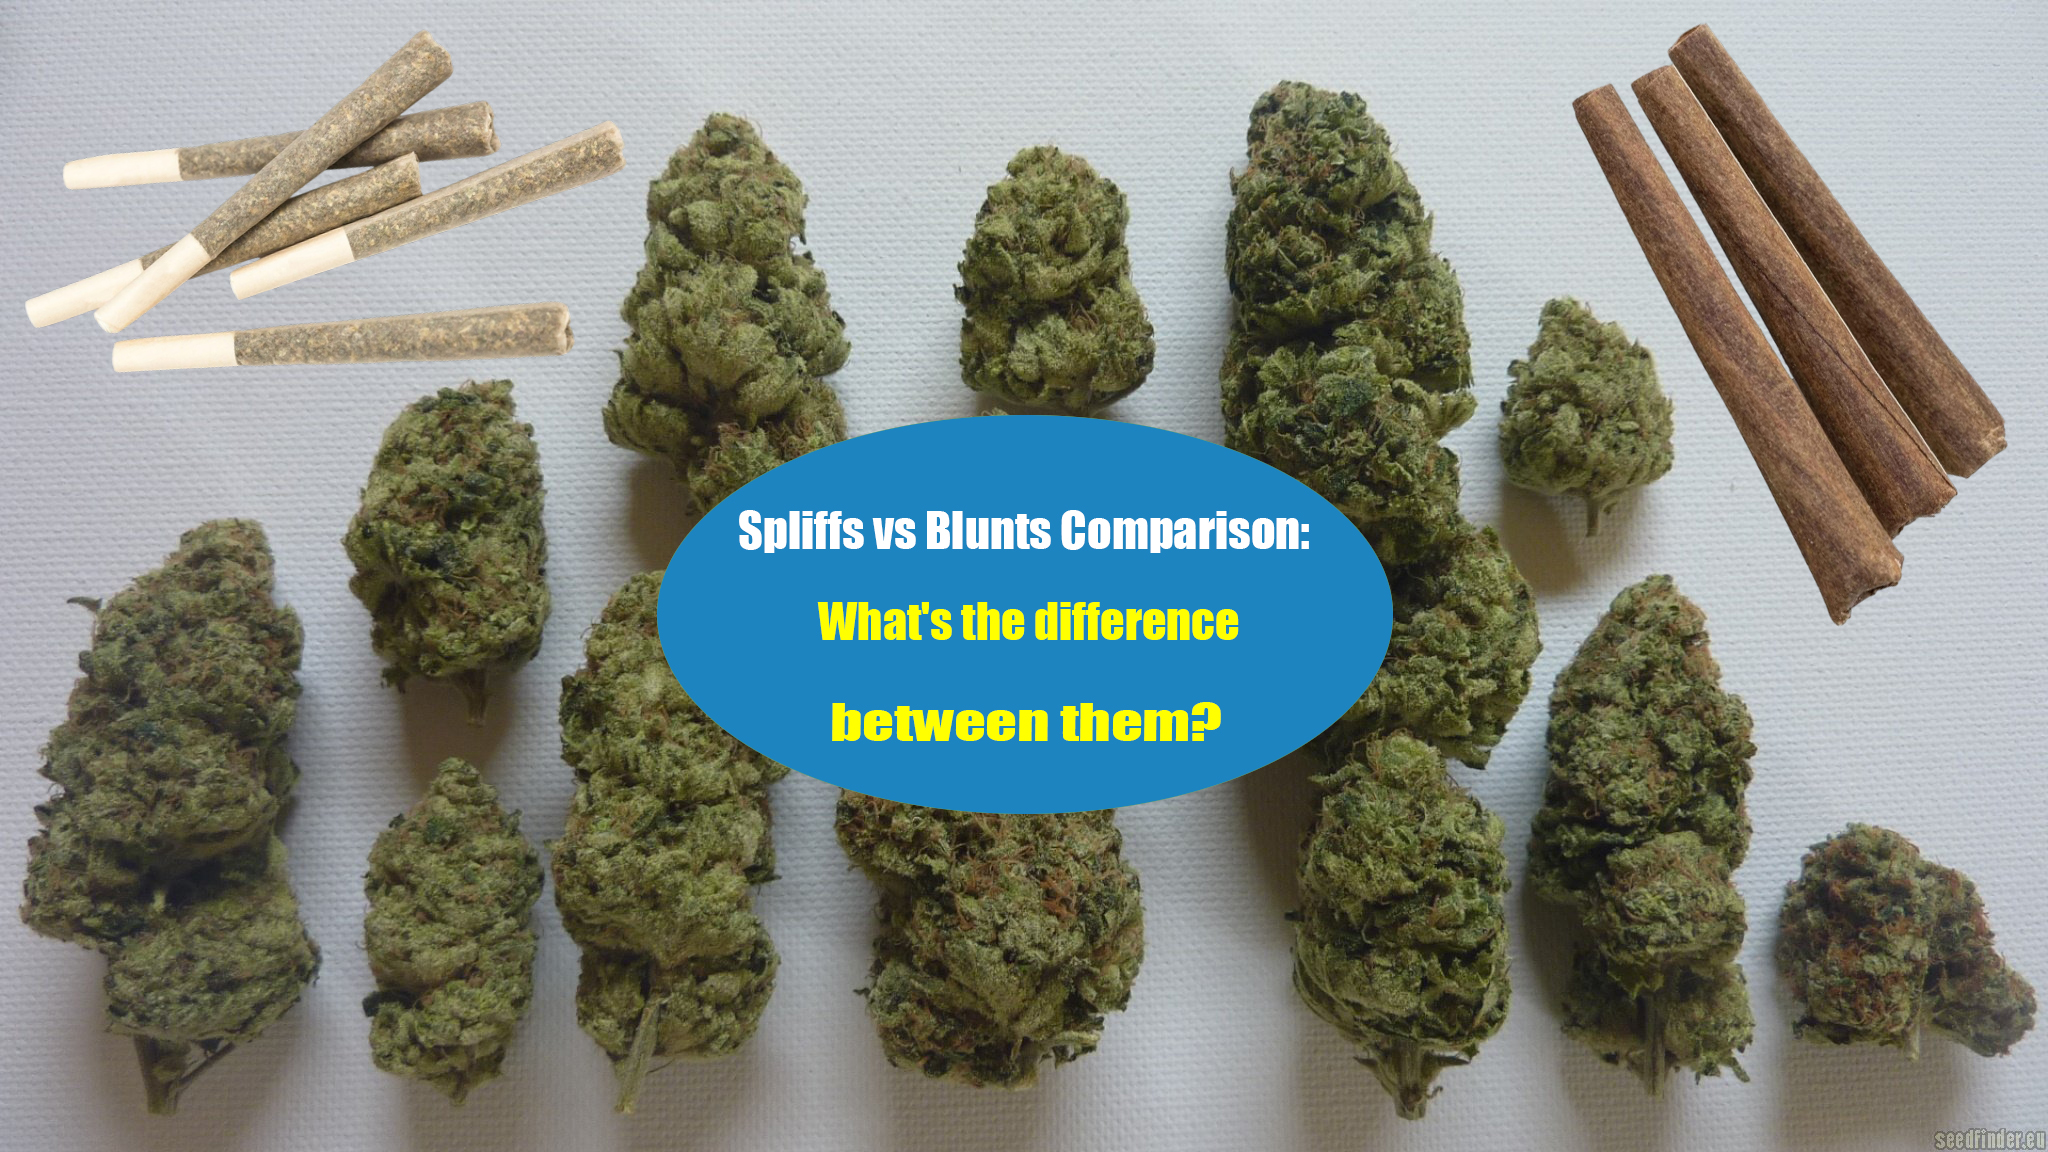 Spliffs vs Blunts Comparison